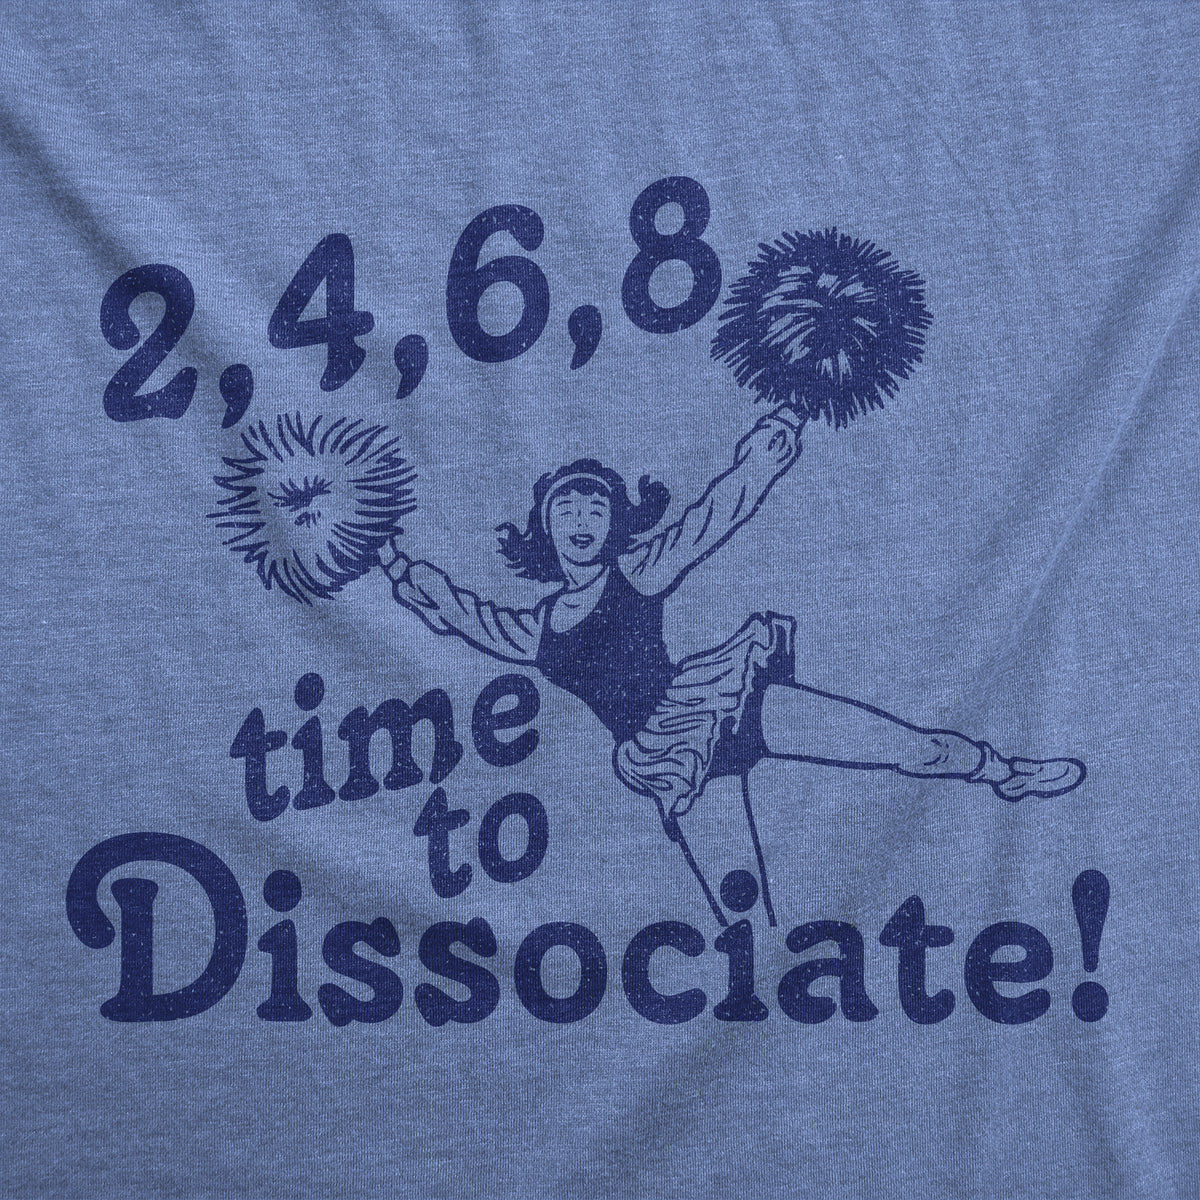 2 4 6 8 Time To Dissociate Men&#39;s T Shirt